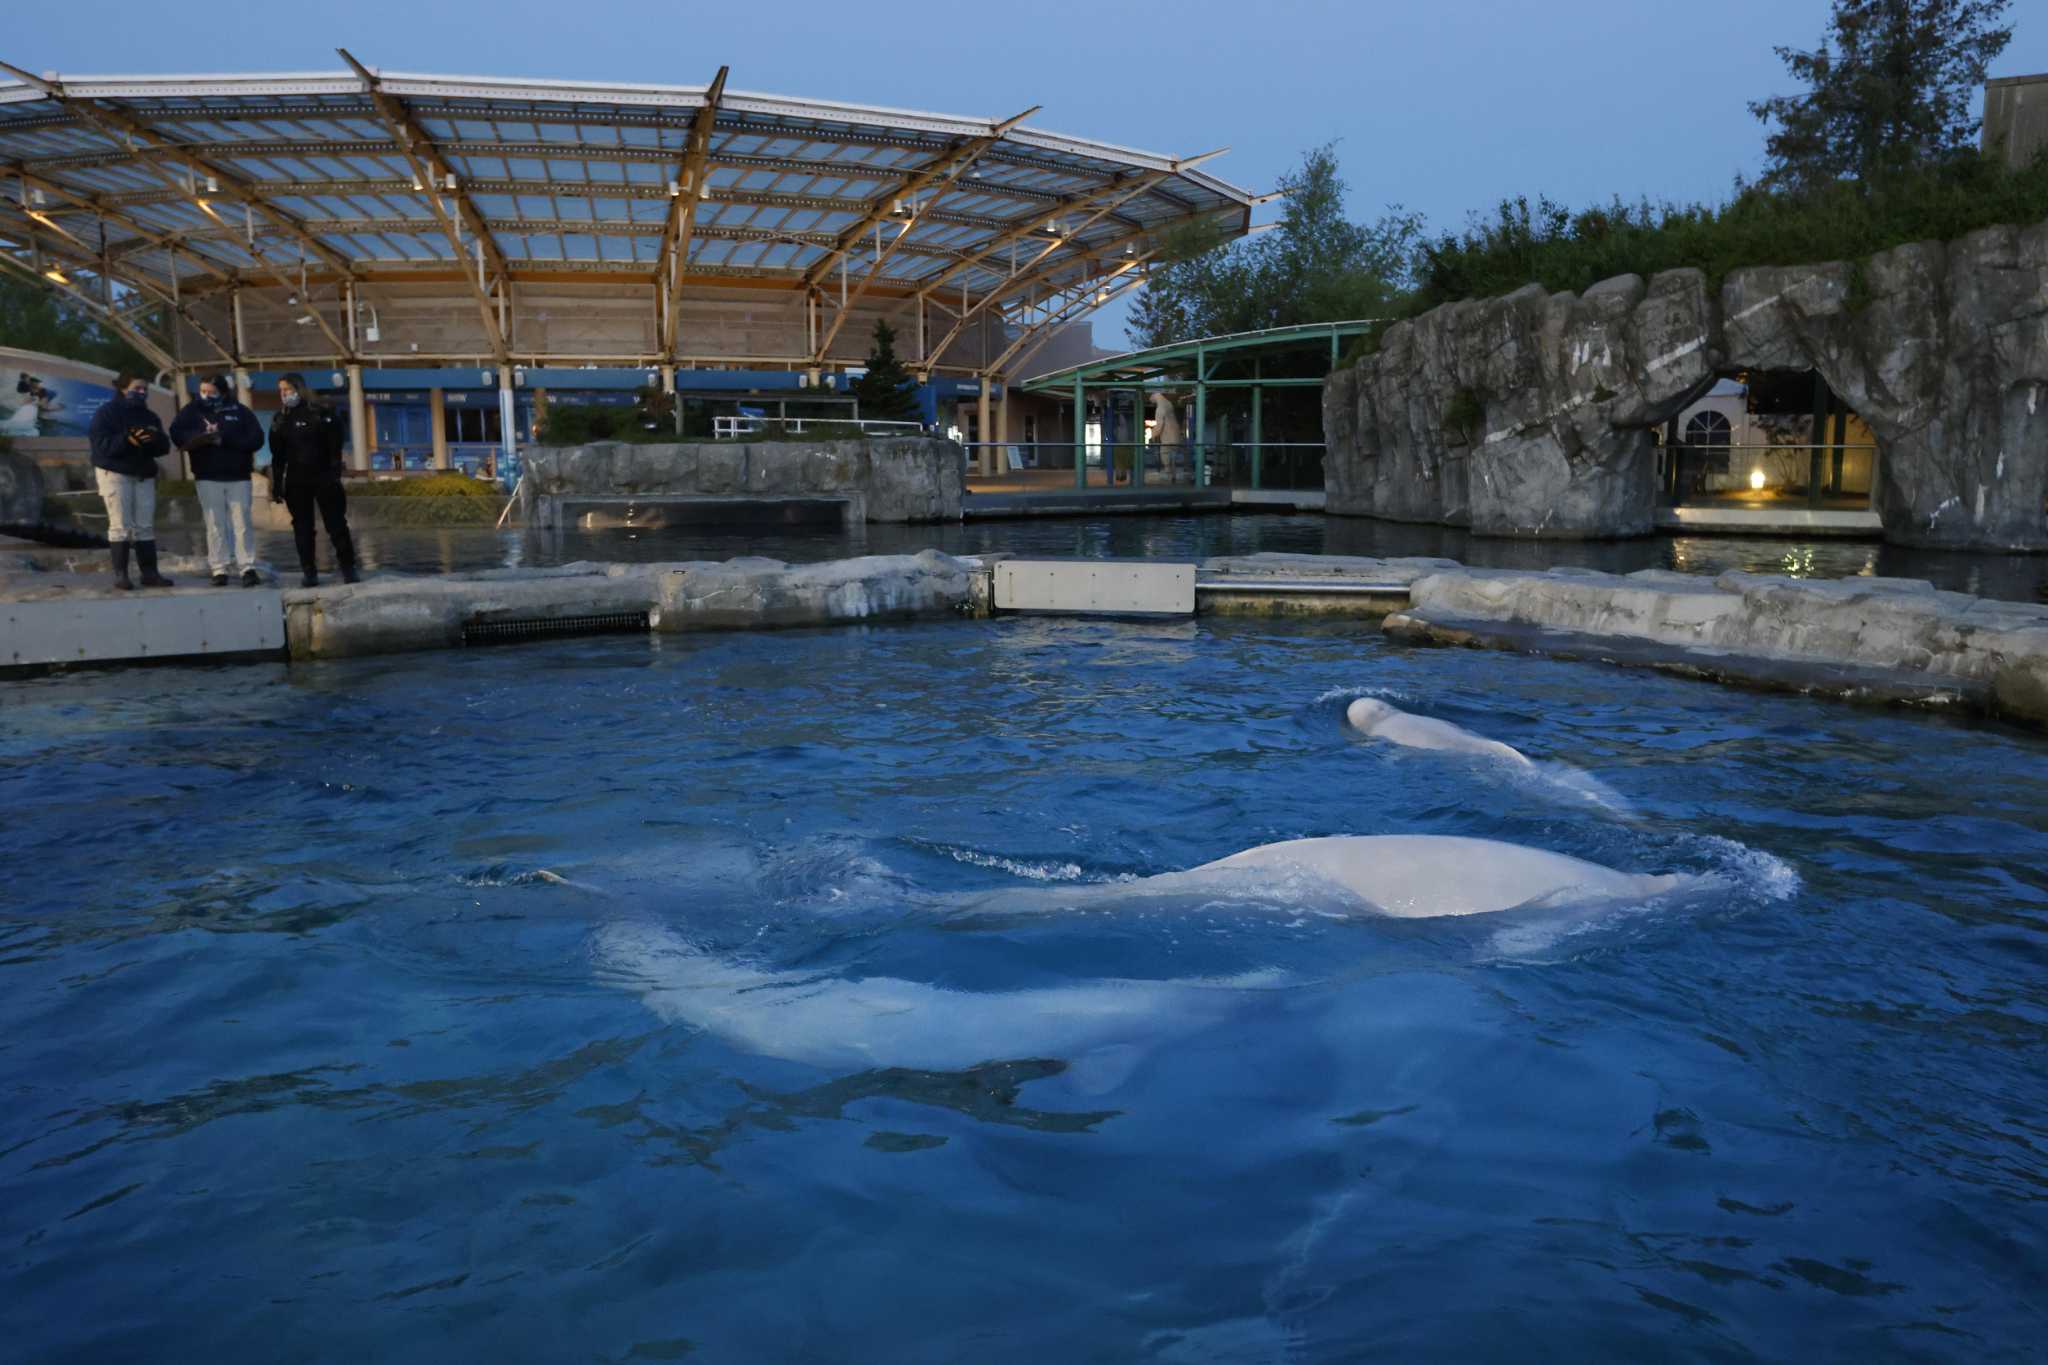 Mystic Aquarium hosts ‘Sips at Sunset’ events on Fridays